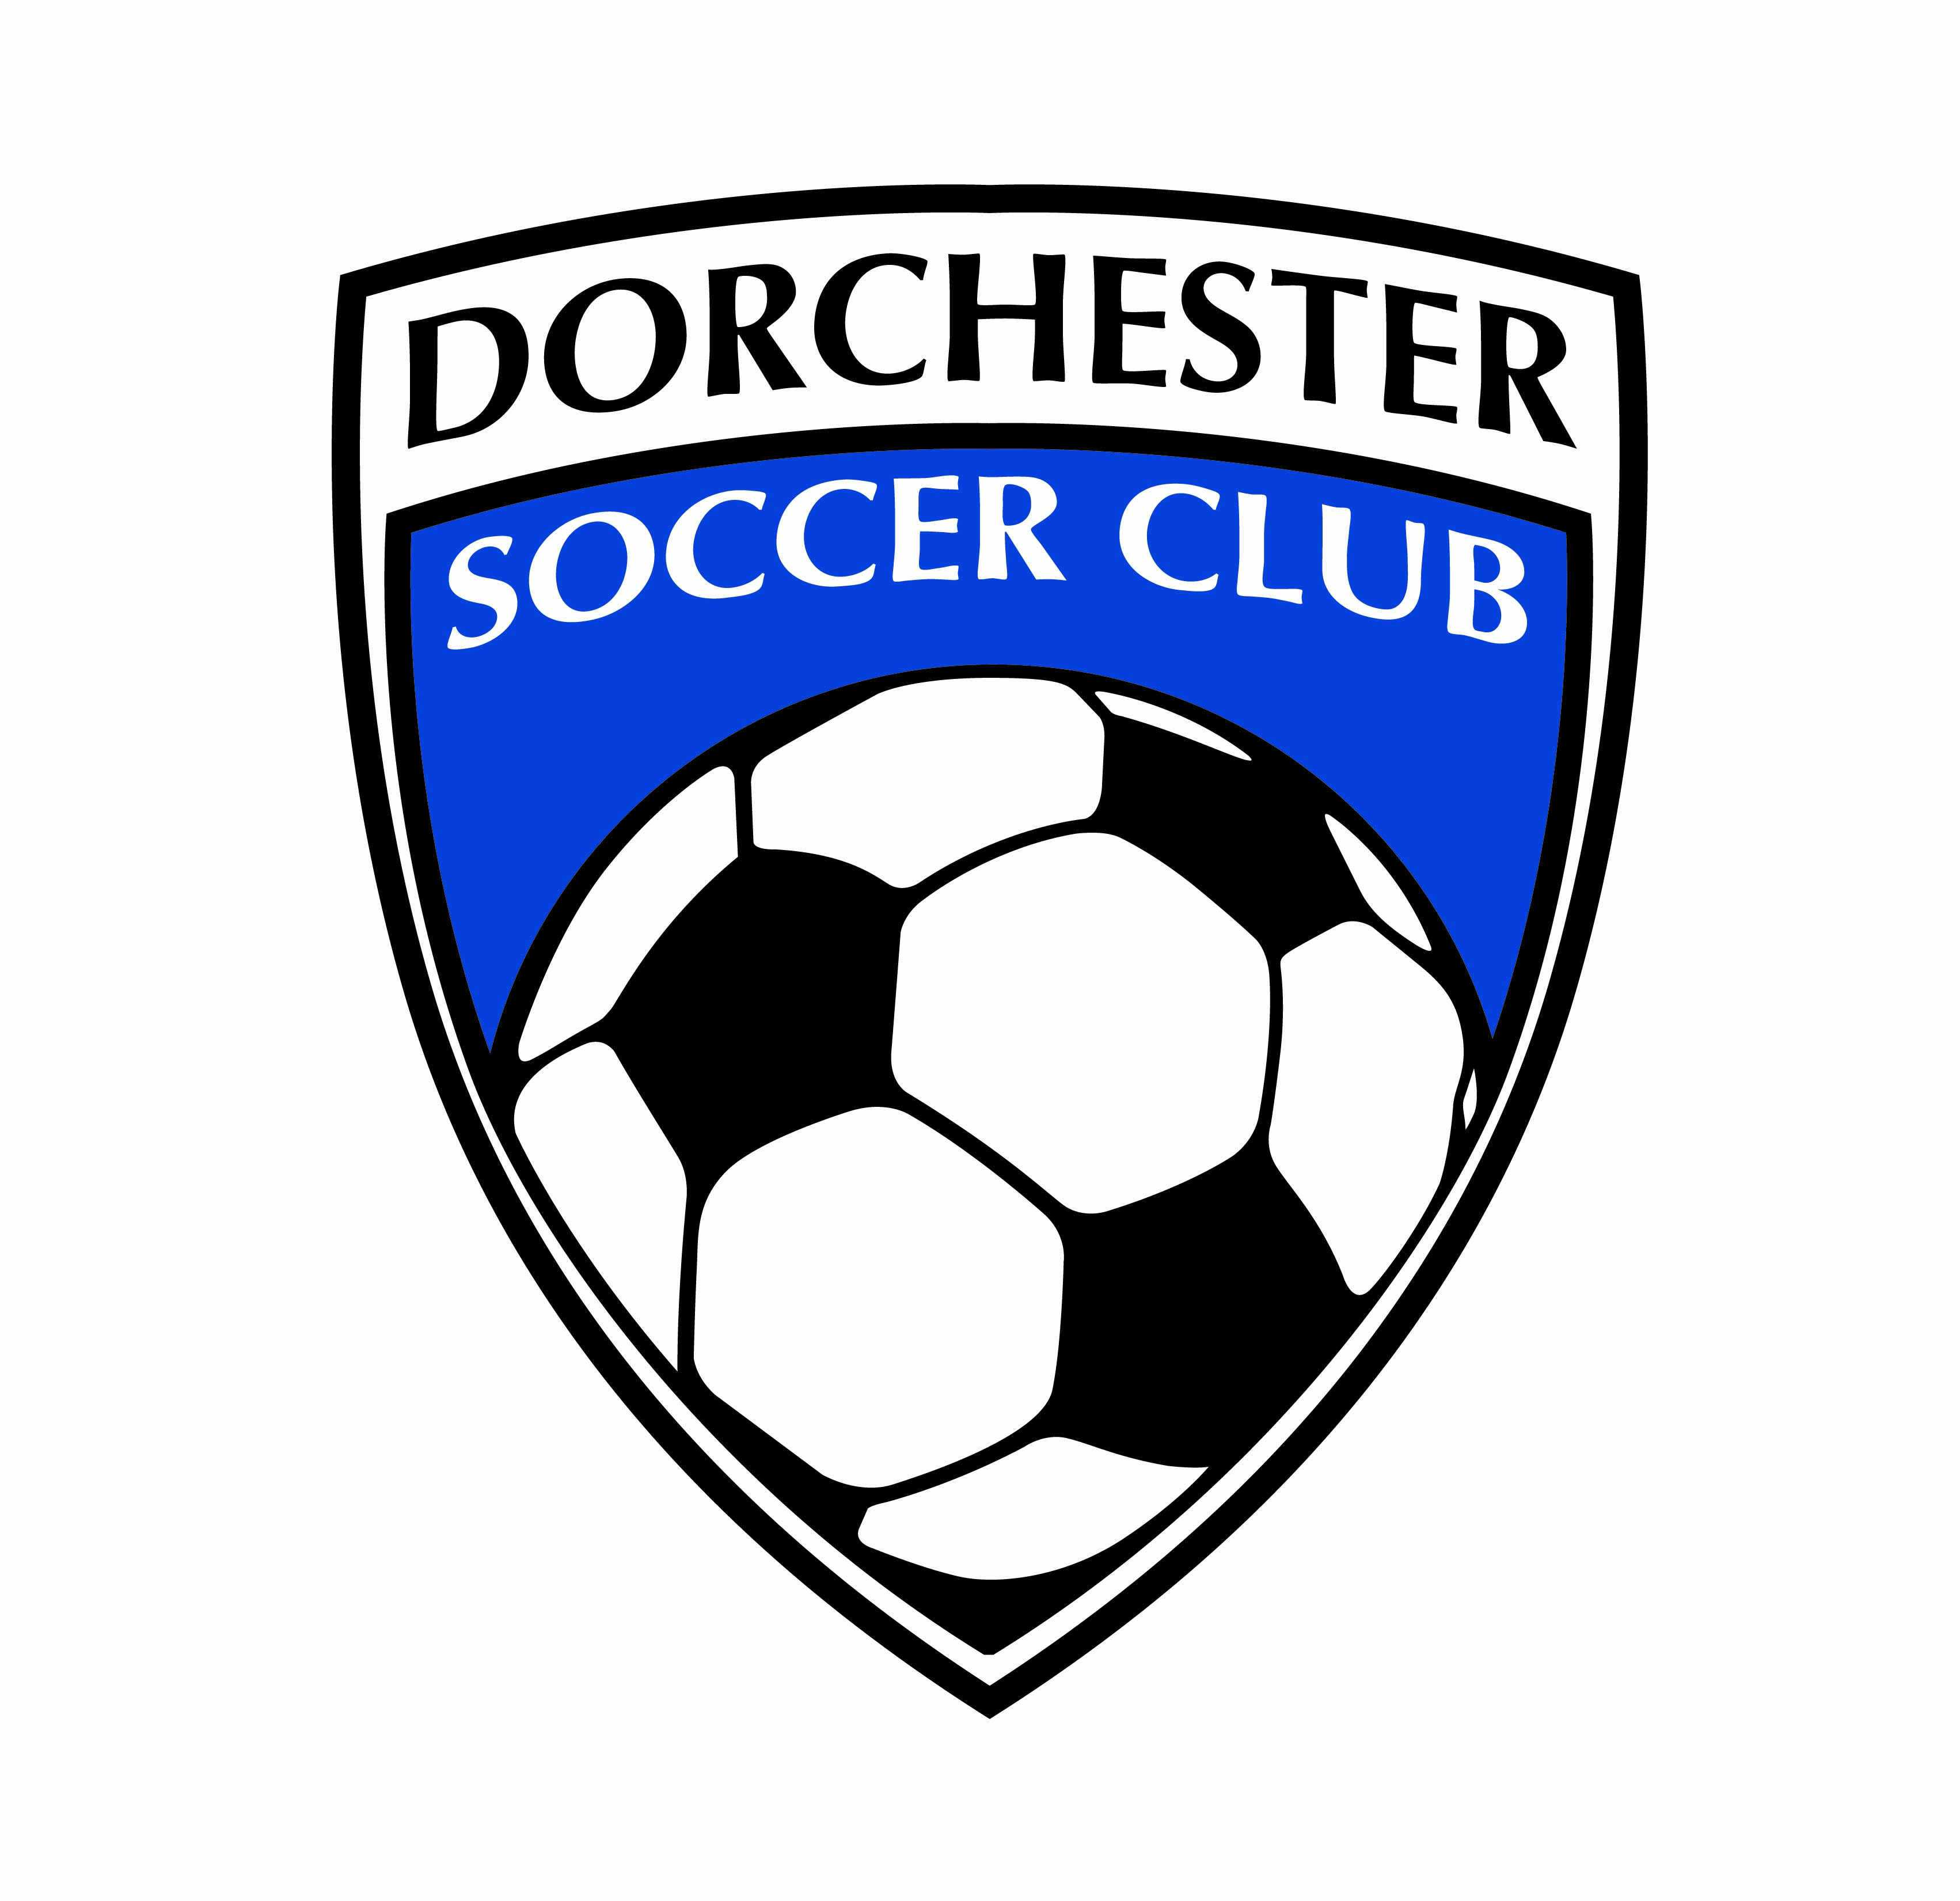 Dorchester Soccer Club (Dorchester Athletic Association)